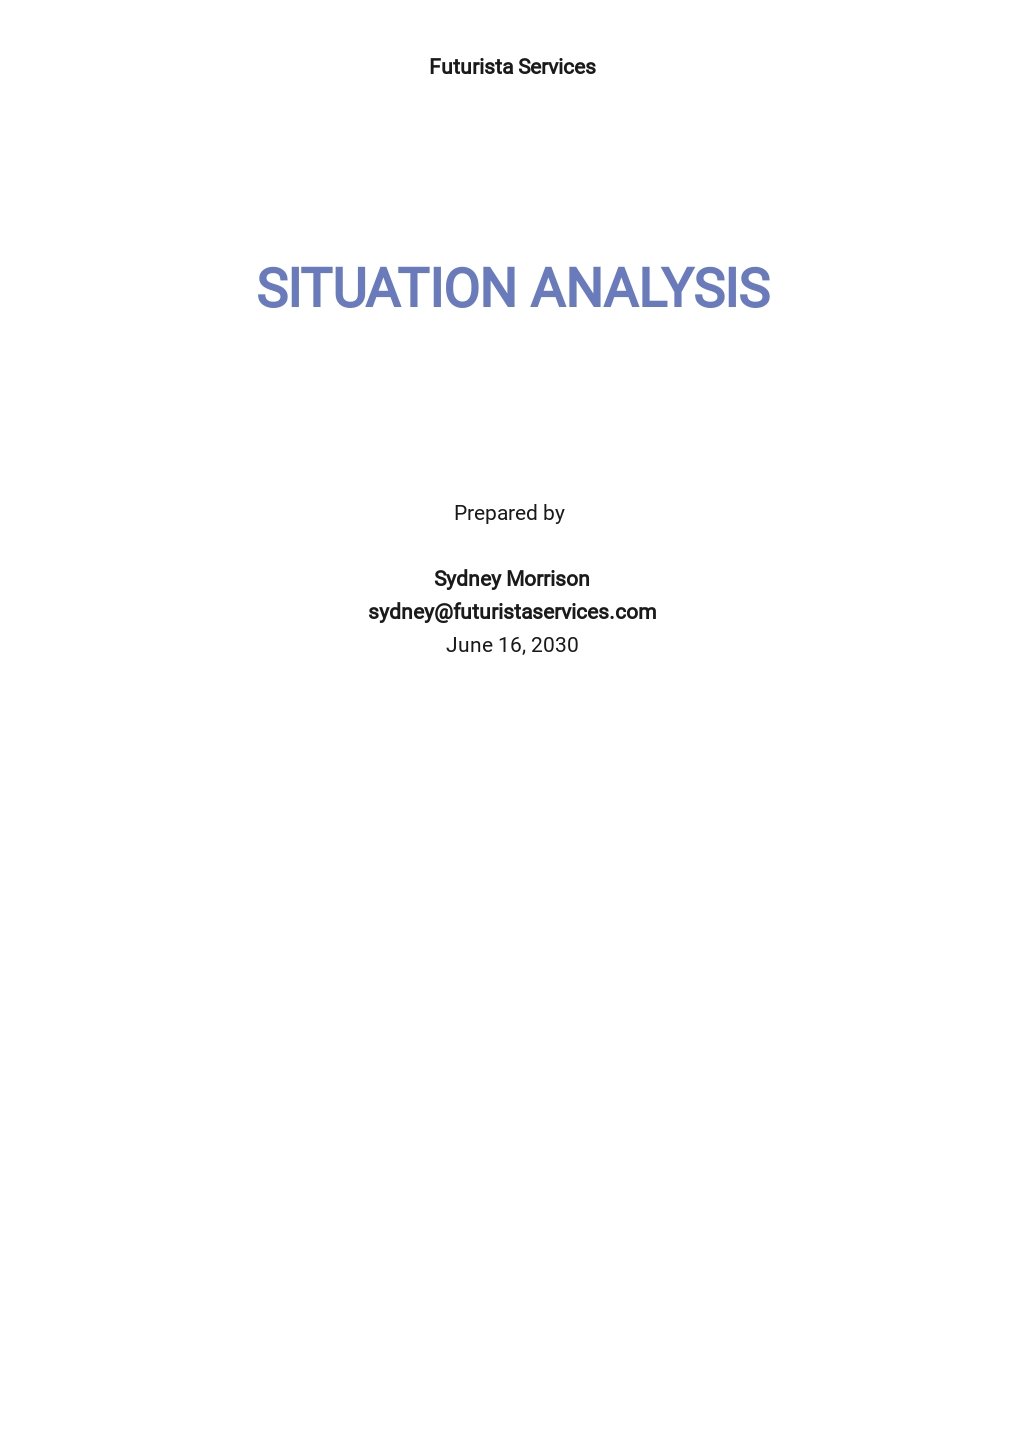 Situation Analysis Template.jpe